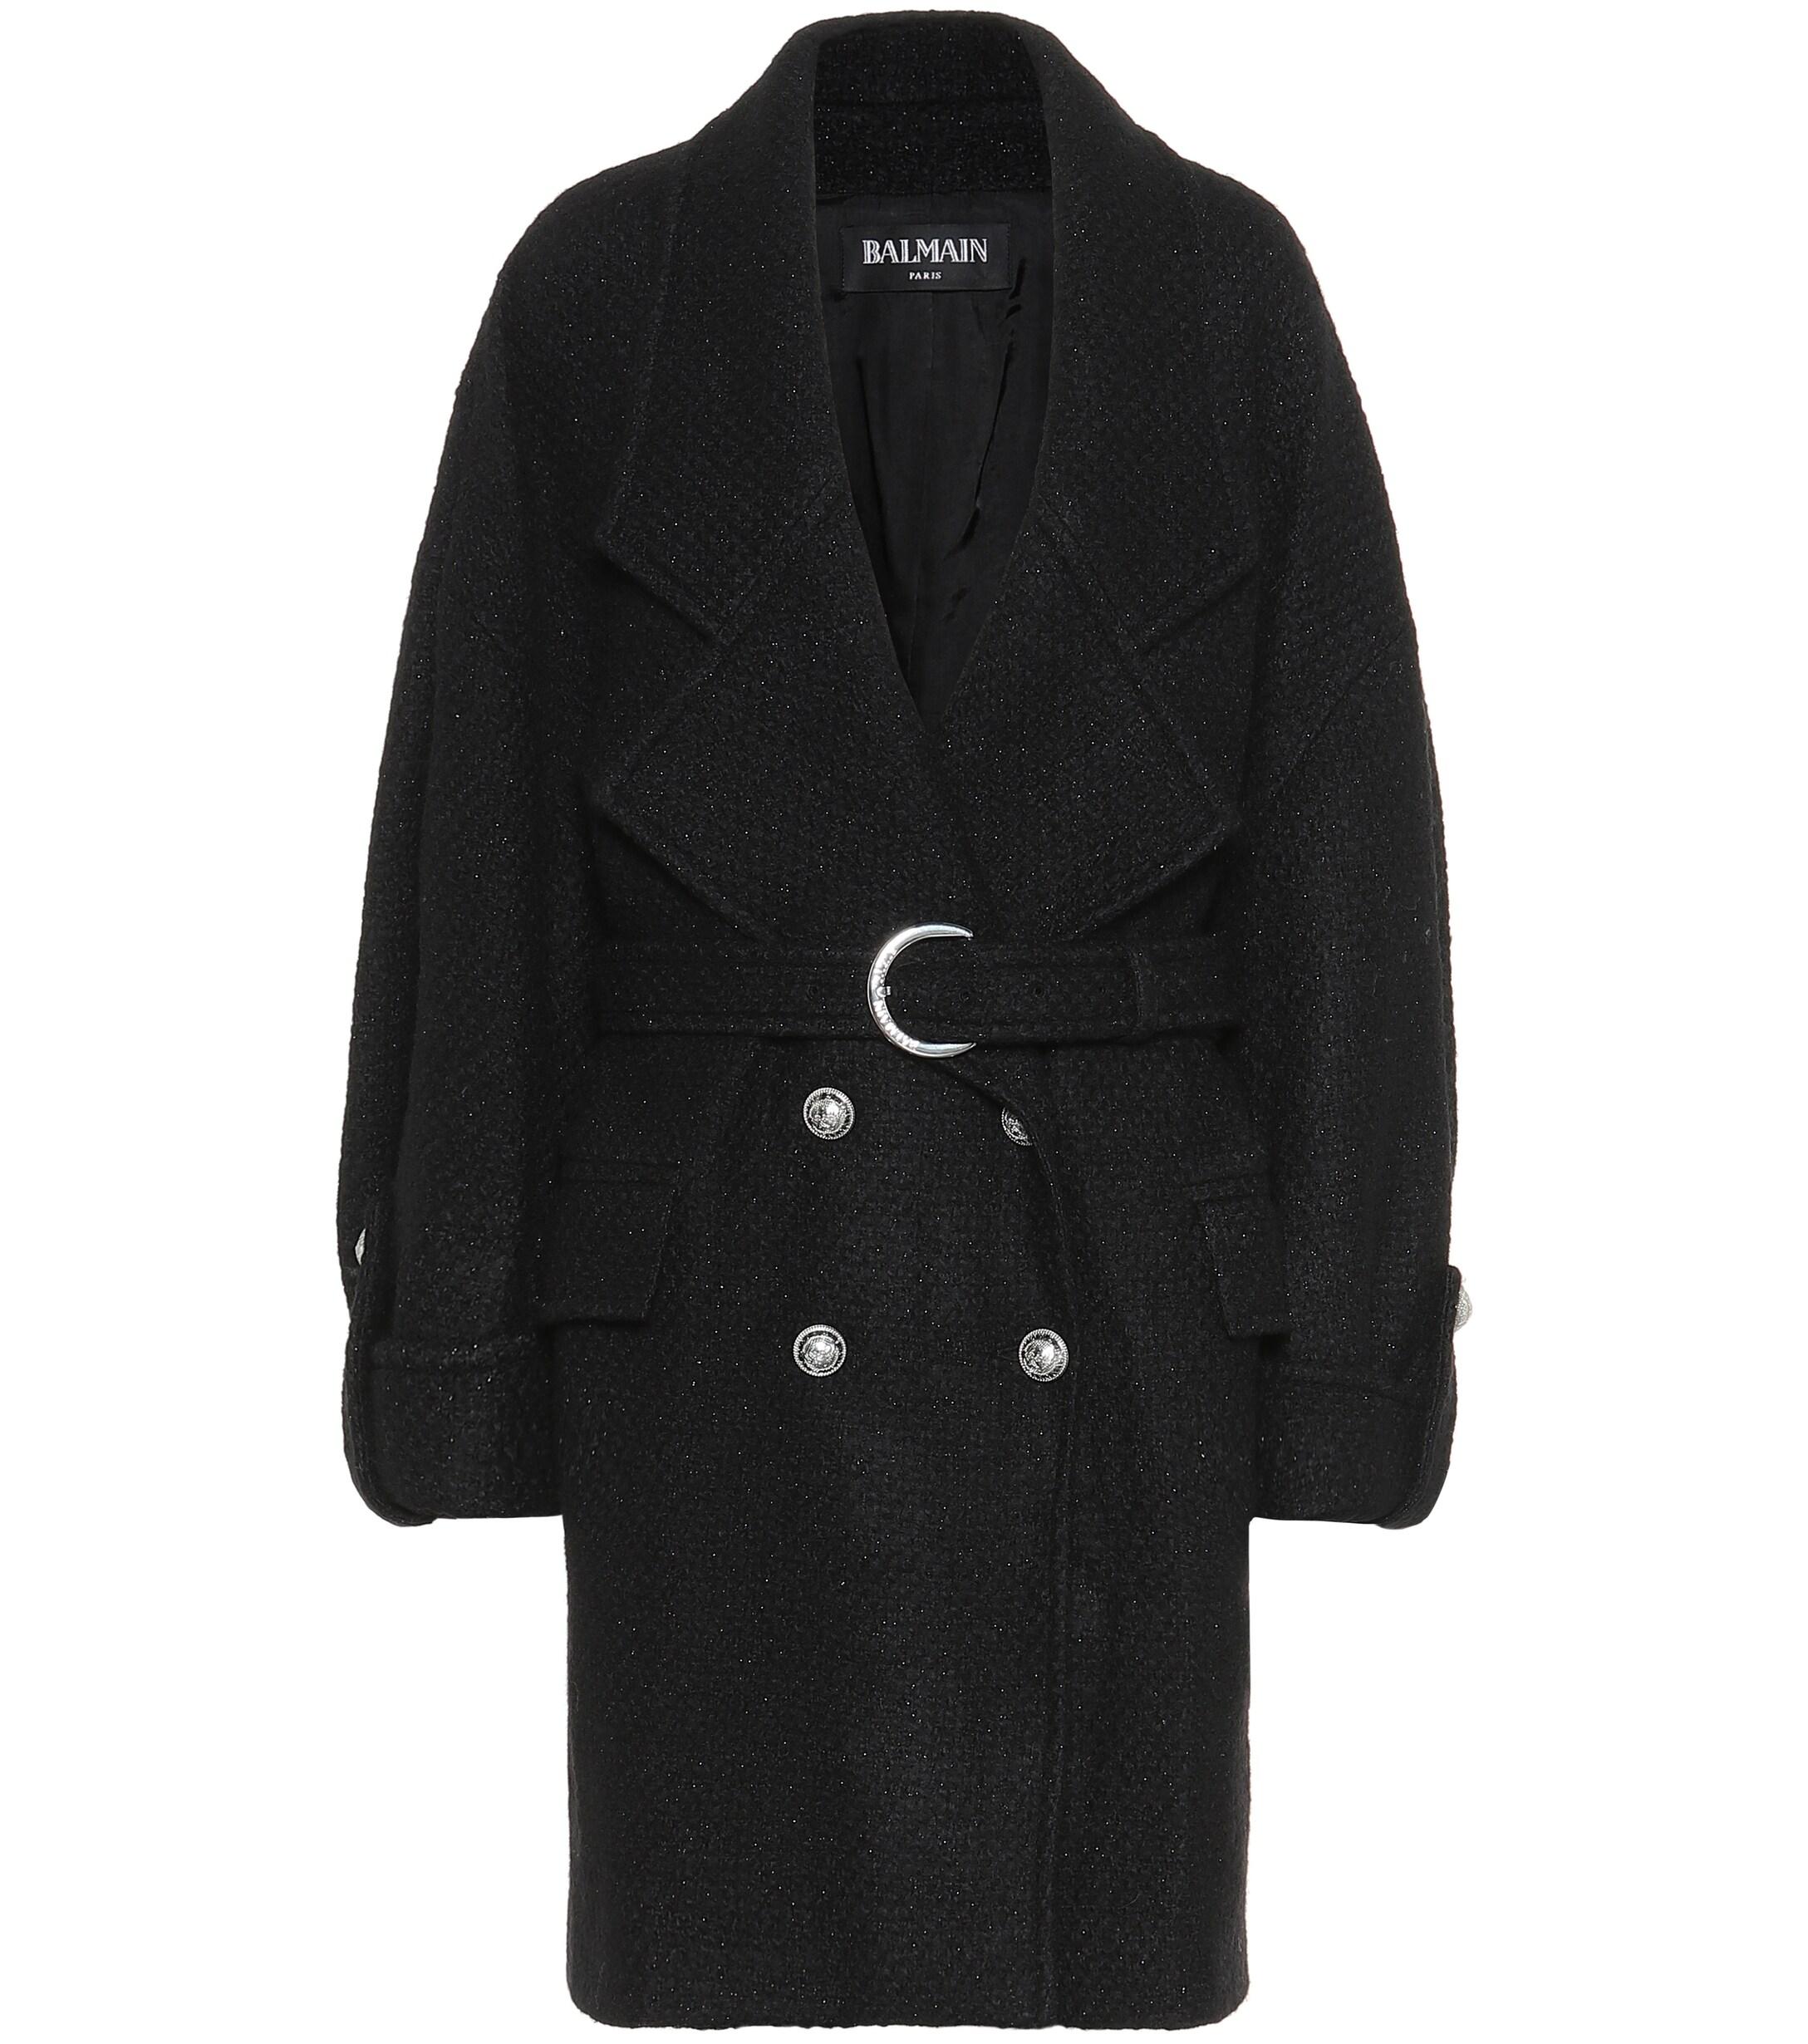 Balmain Wool-blend Coat in Black - Lyst